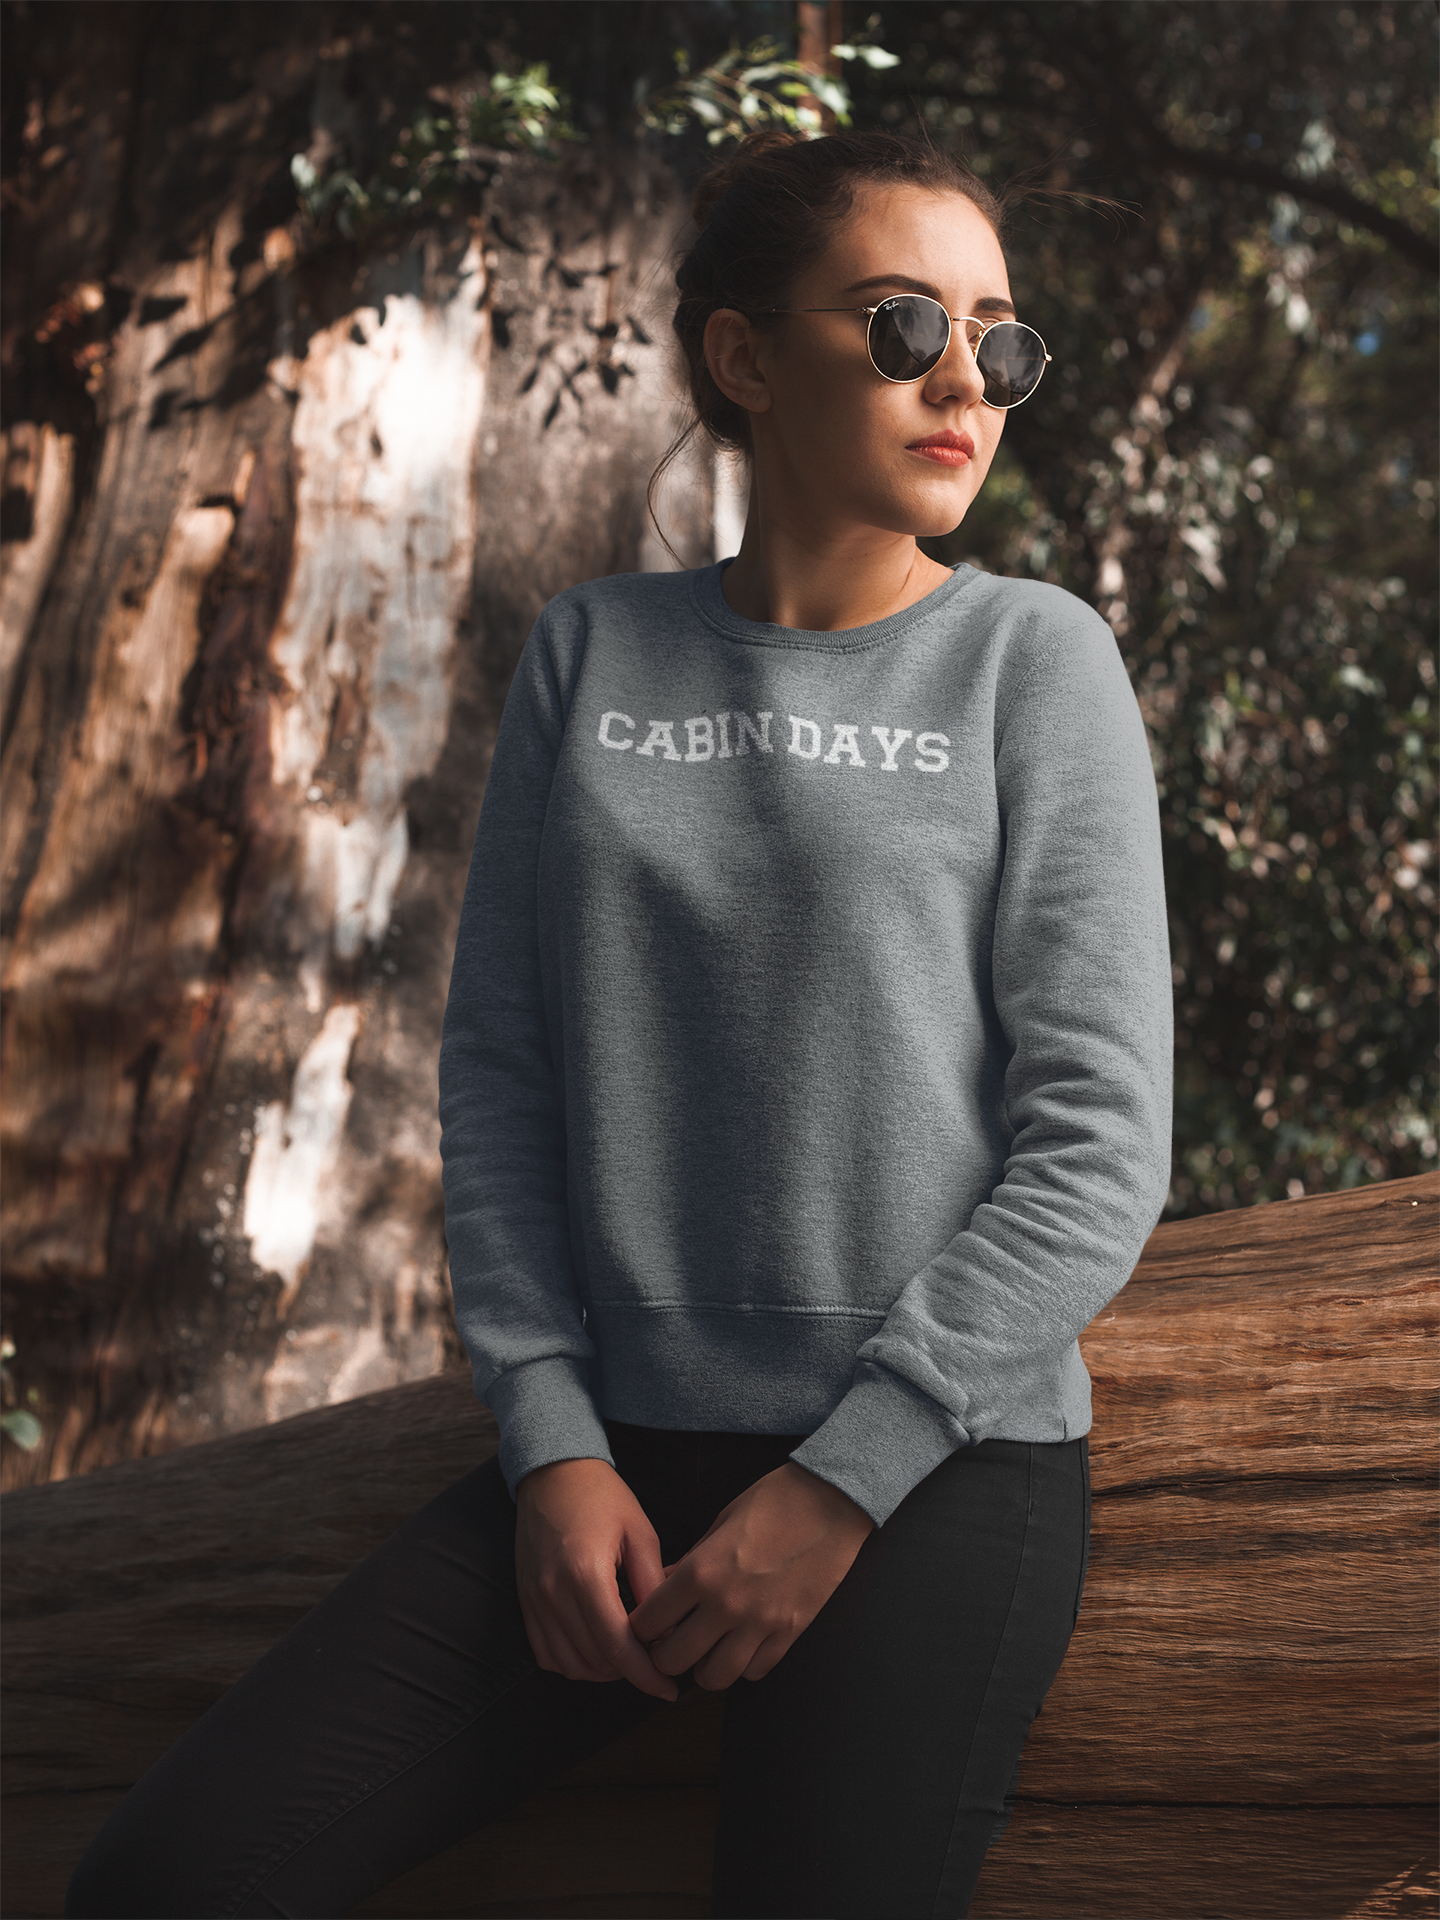 Cabin Days Sweatshirt on a model in a woodsy area.